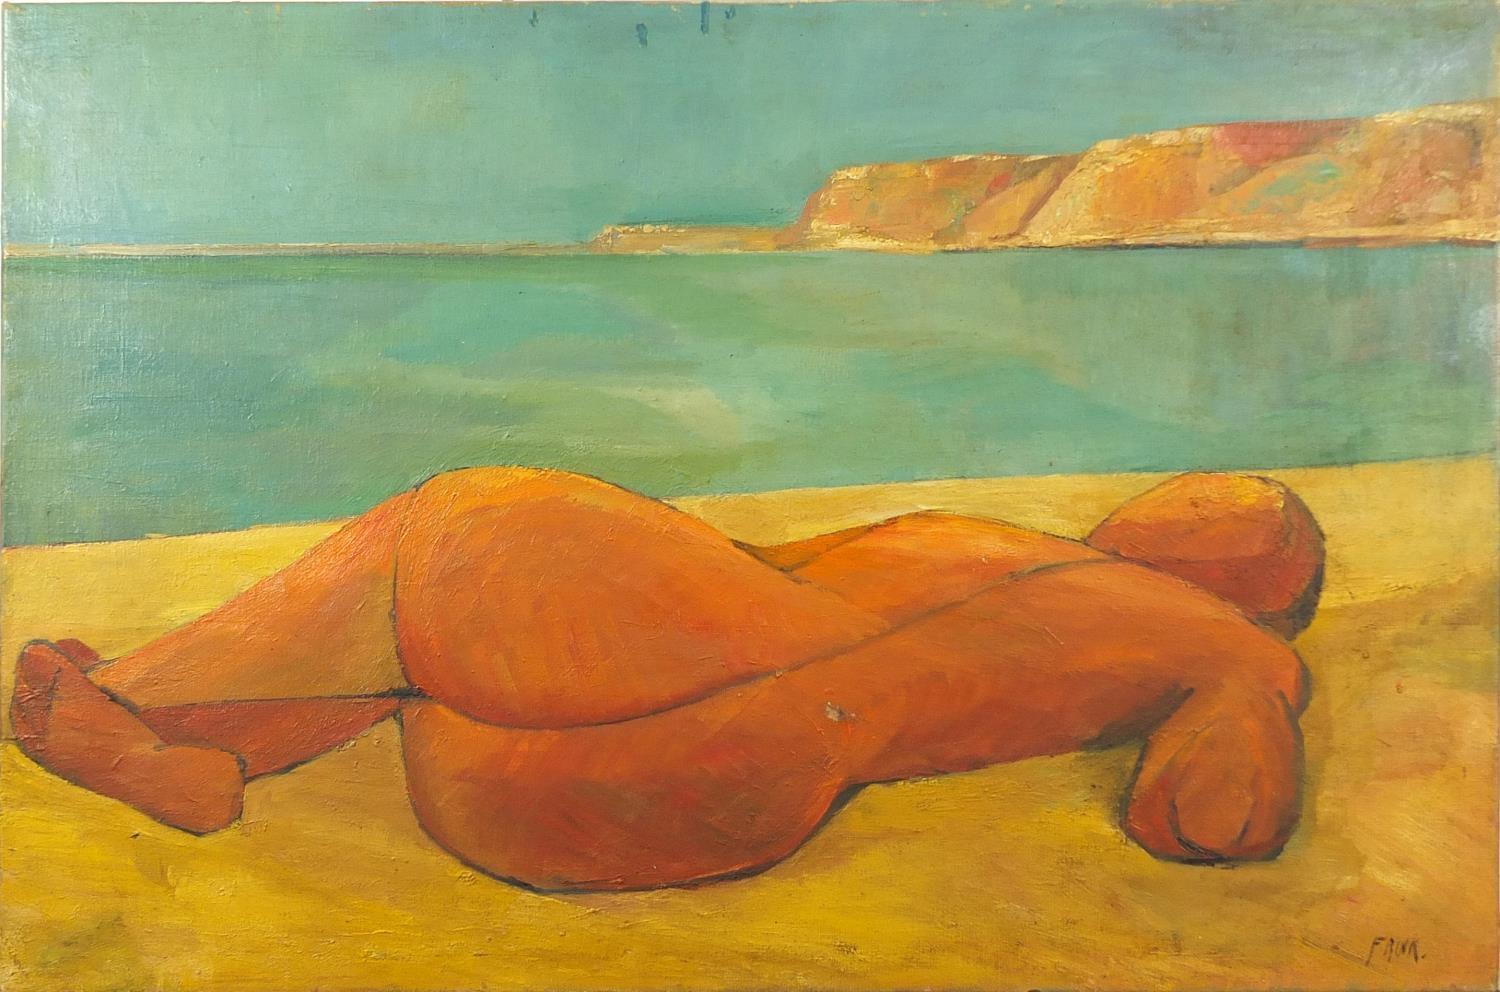 Manner of Elisabeth Frink - Nude female on a beach, oil on canvas, unframed, 91.5cm x 61.5cm : For